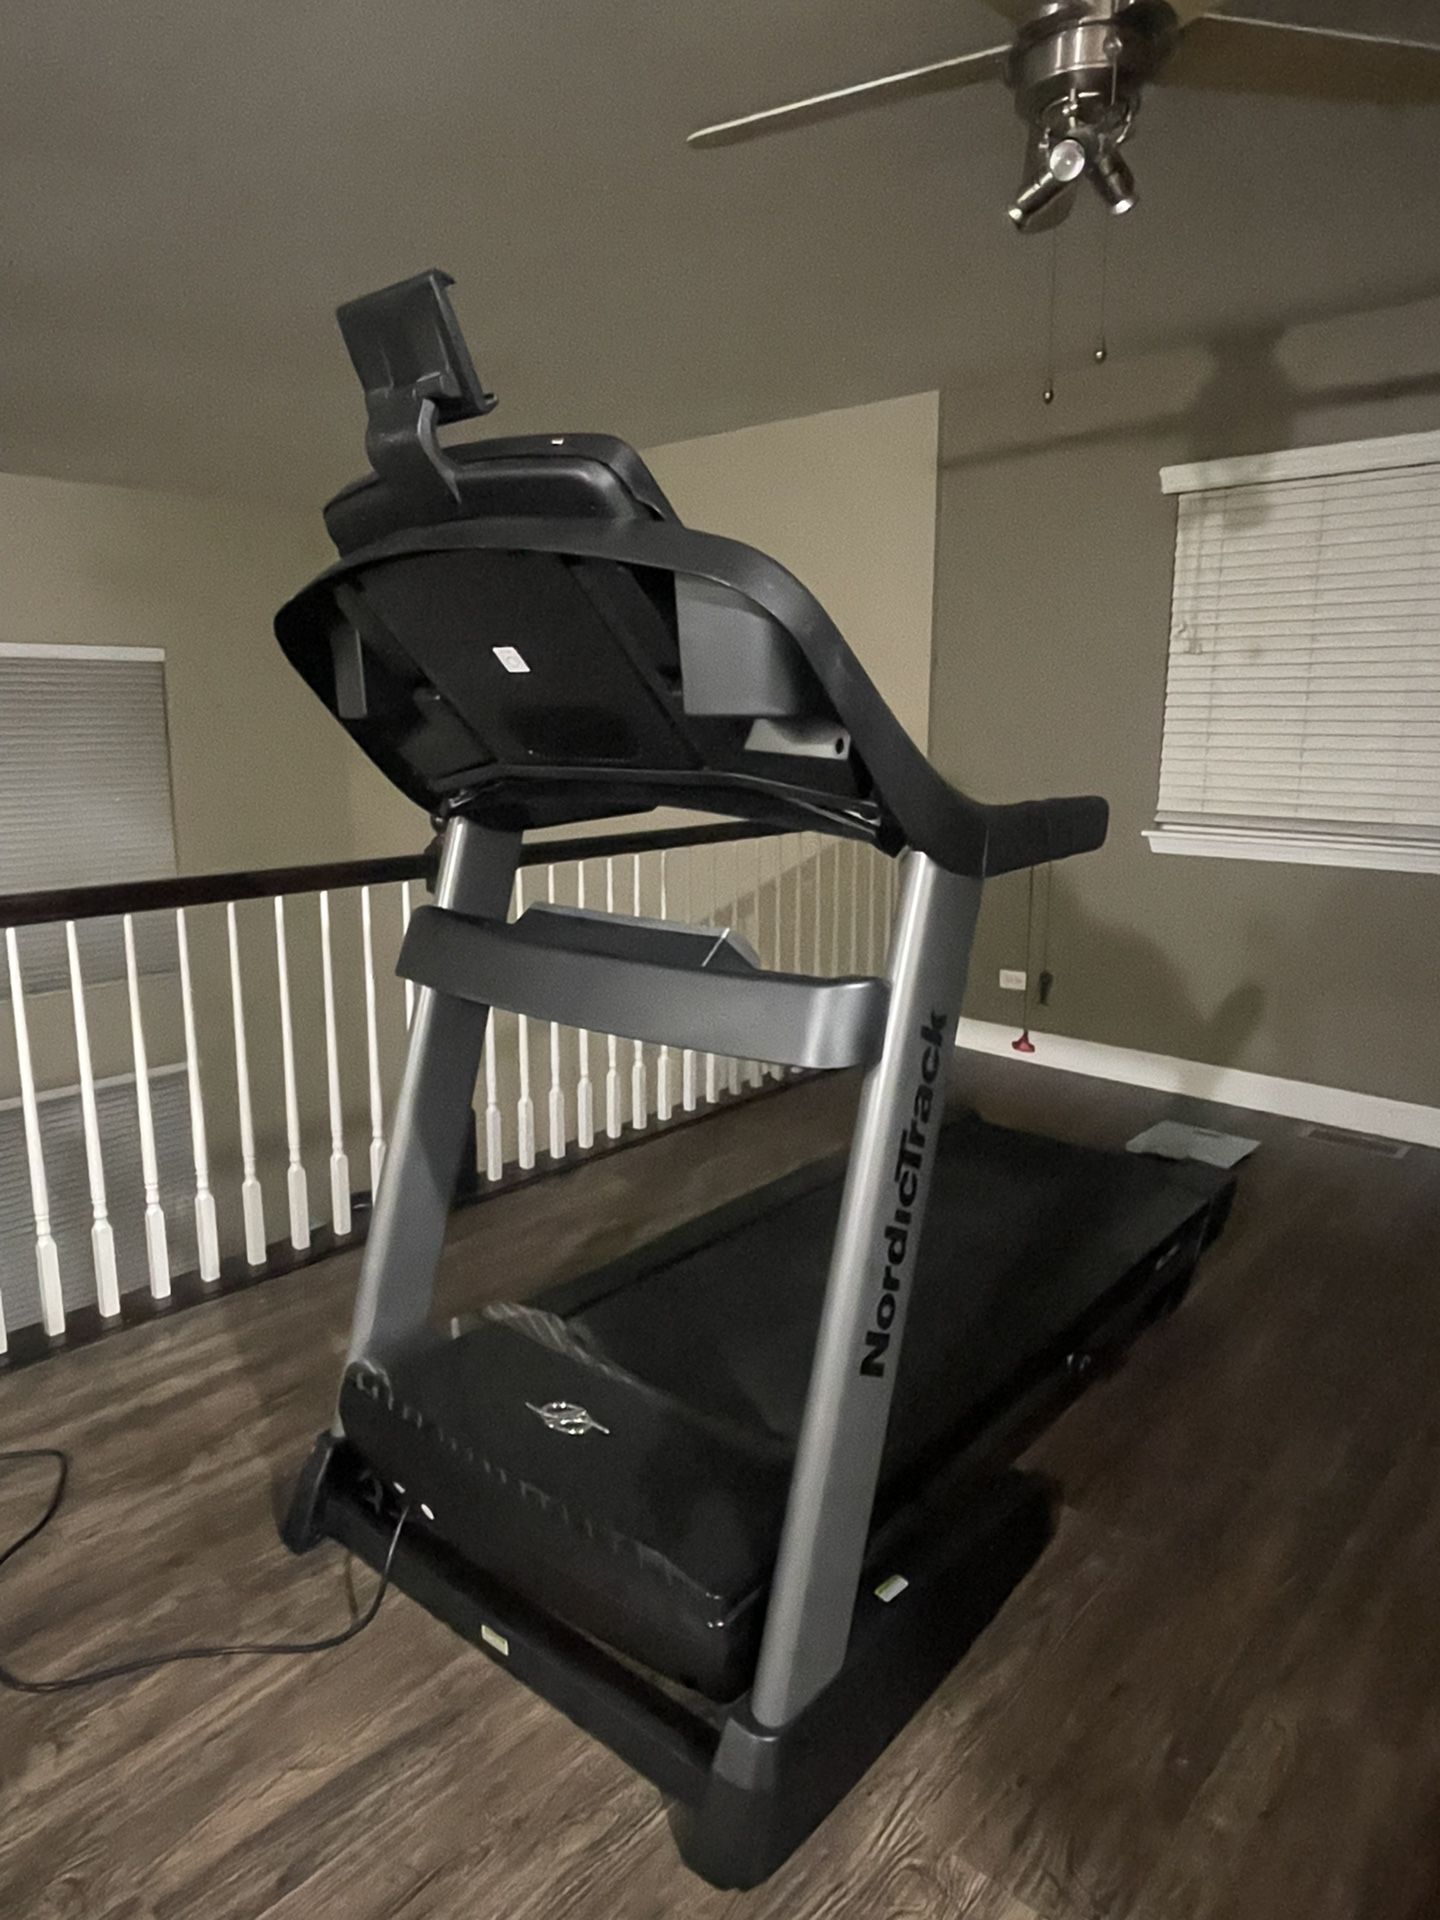 Treadmill Nordictrack Elite 5800